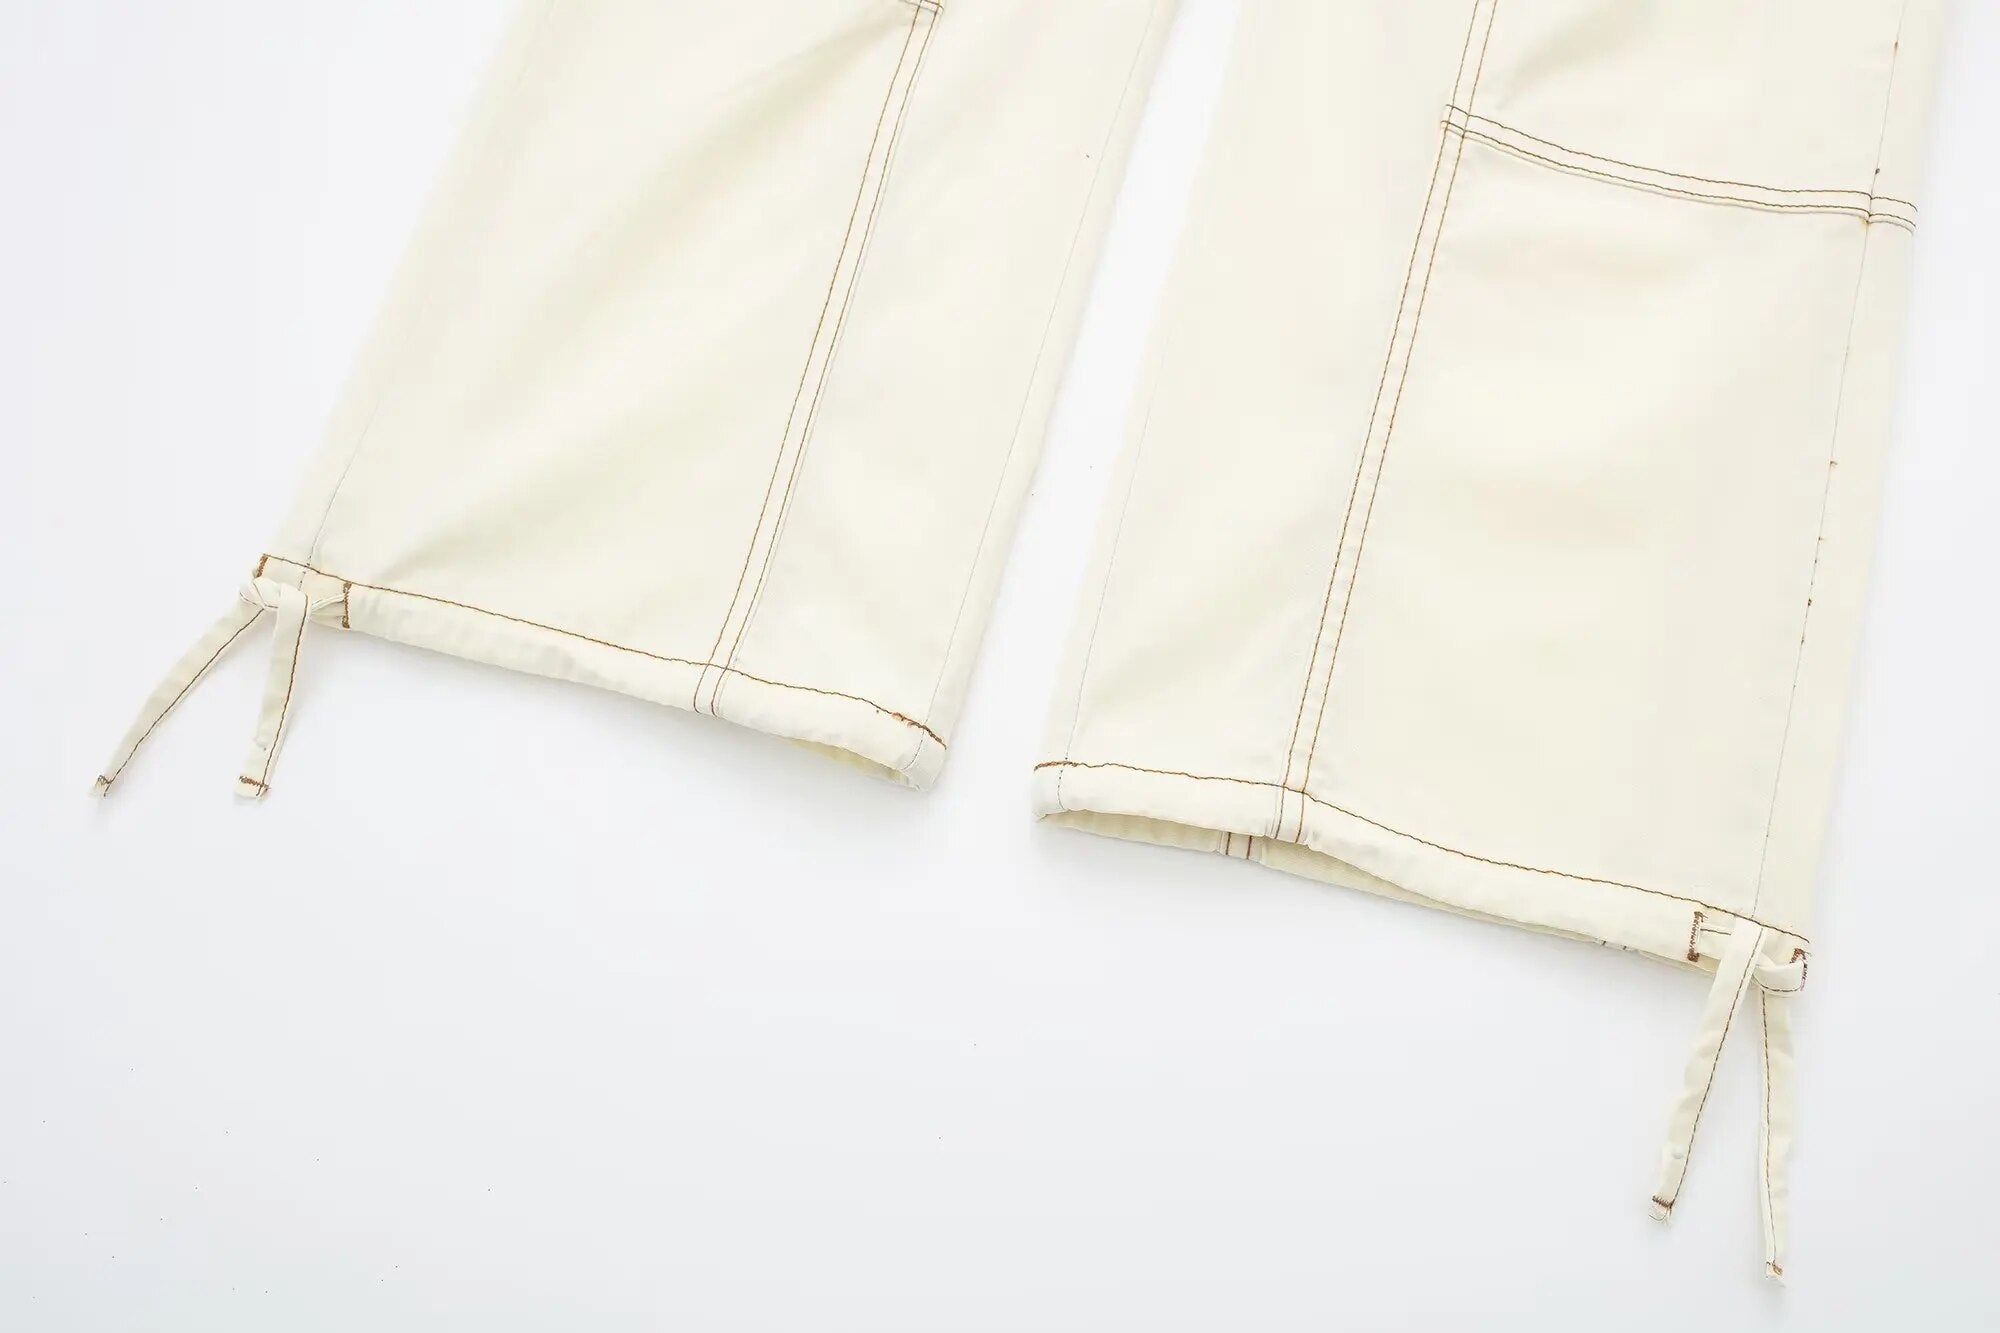 Lovevop - NEW Women'sPatch pockets on leg and backTap pocketsAdjustable cuffsContrast stitchingDress stitched cargo pants